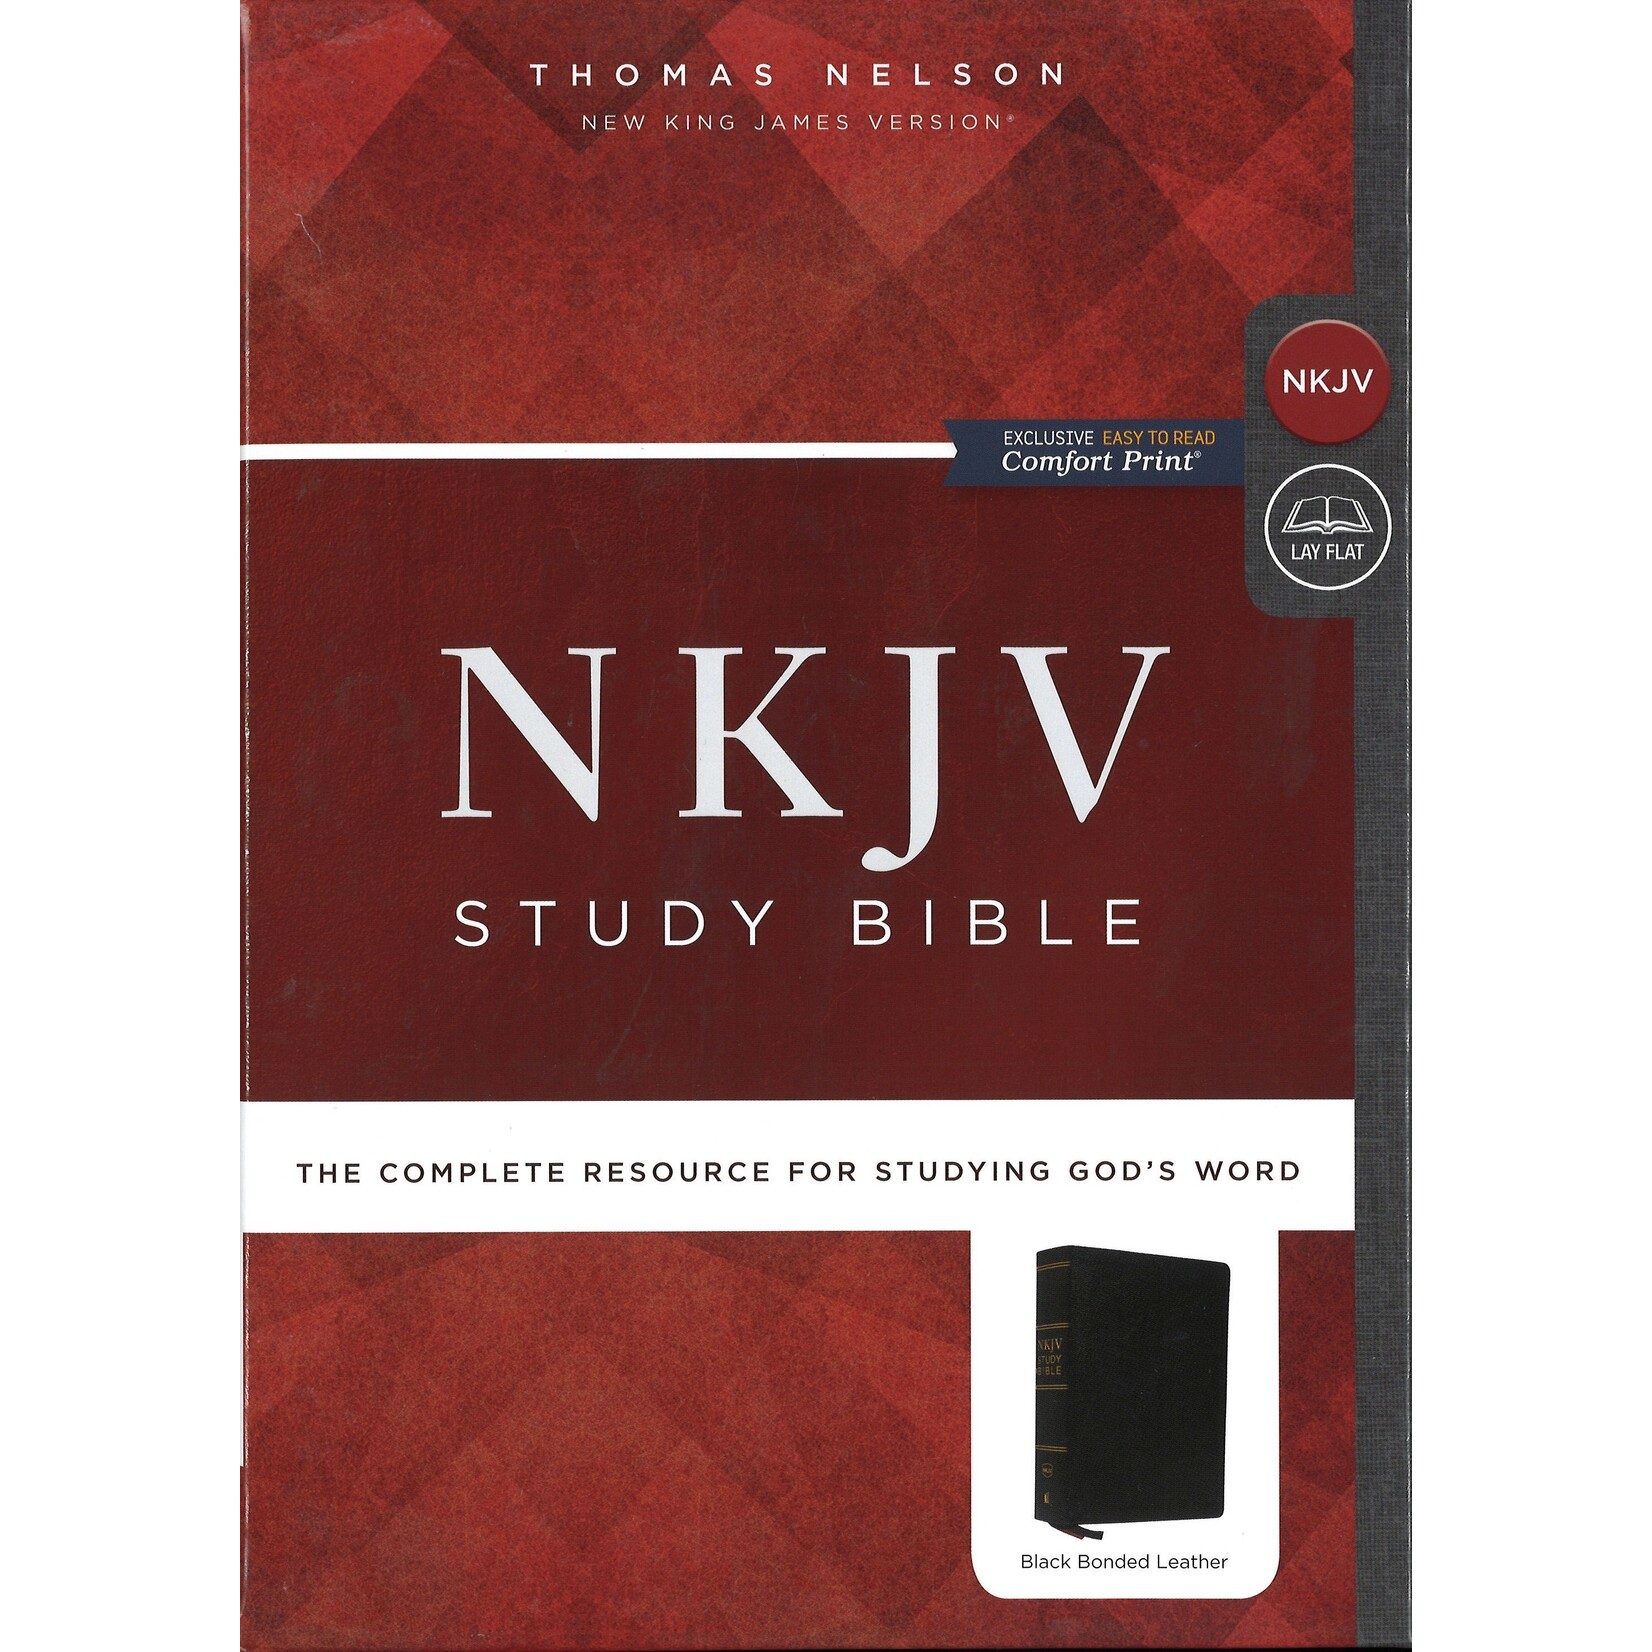 NKJV STUDY BIBLE BLK